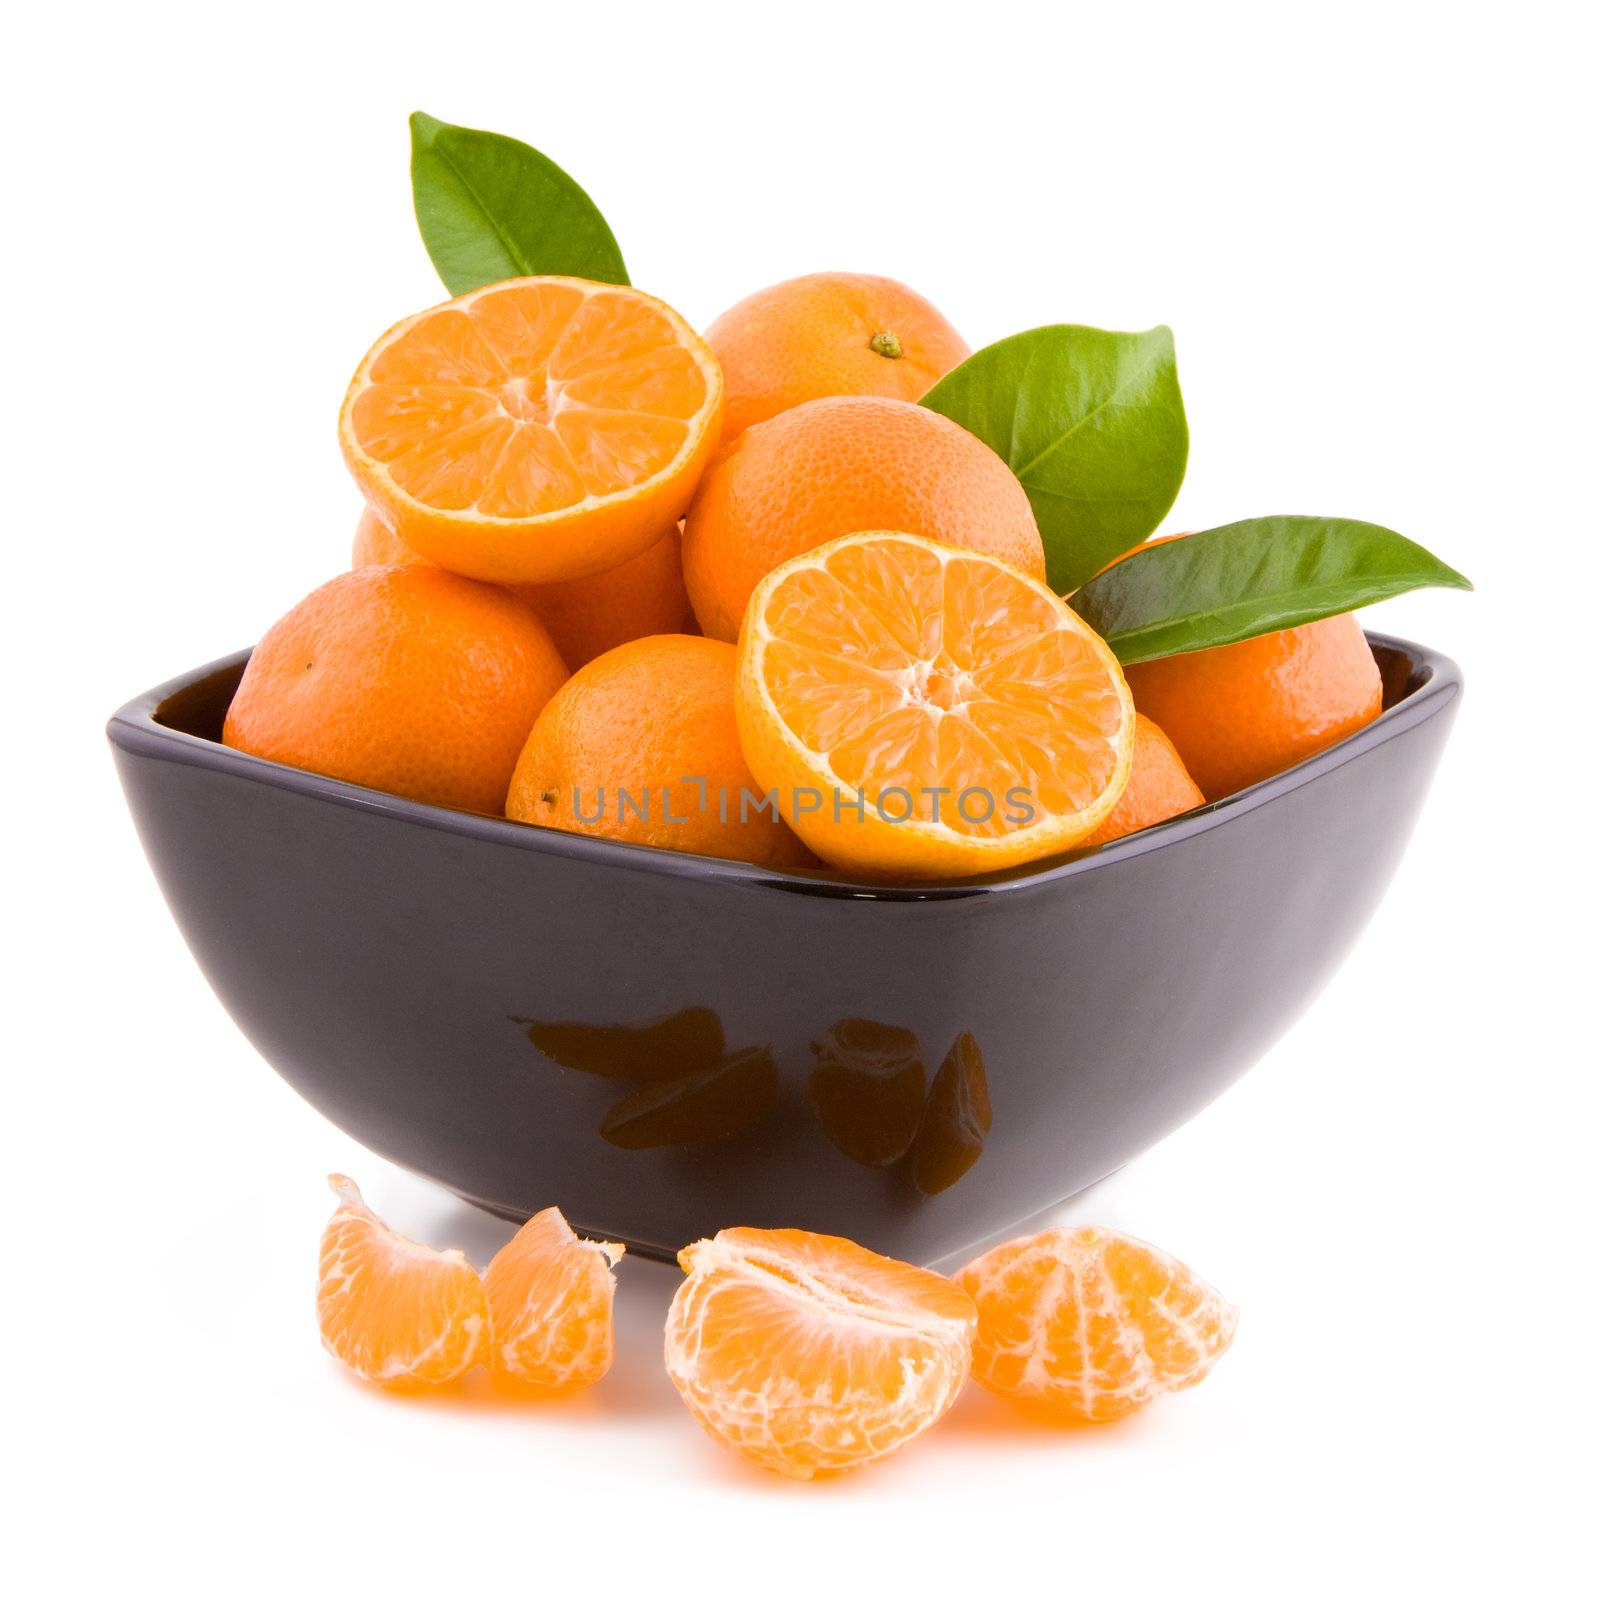 Tangerines ina a bowl by Gbuglok